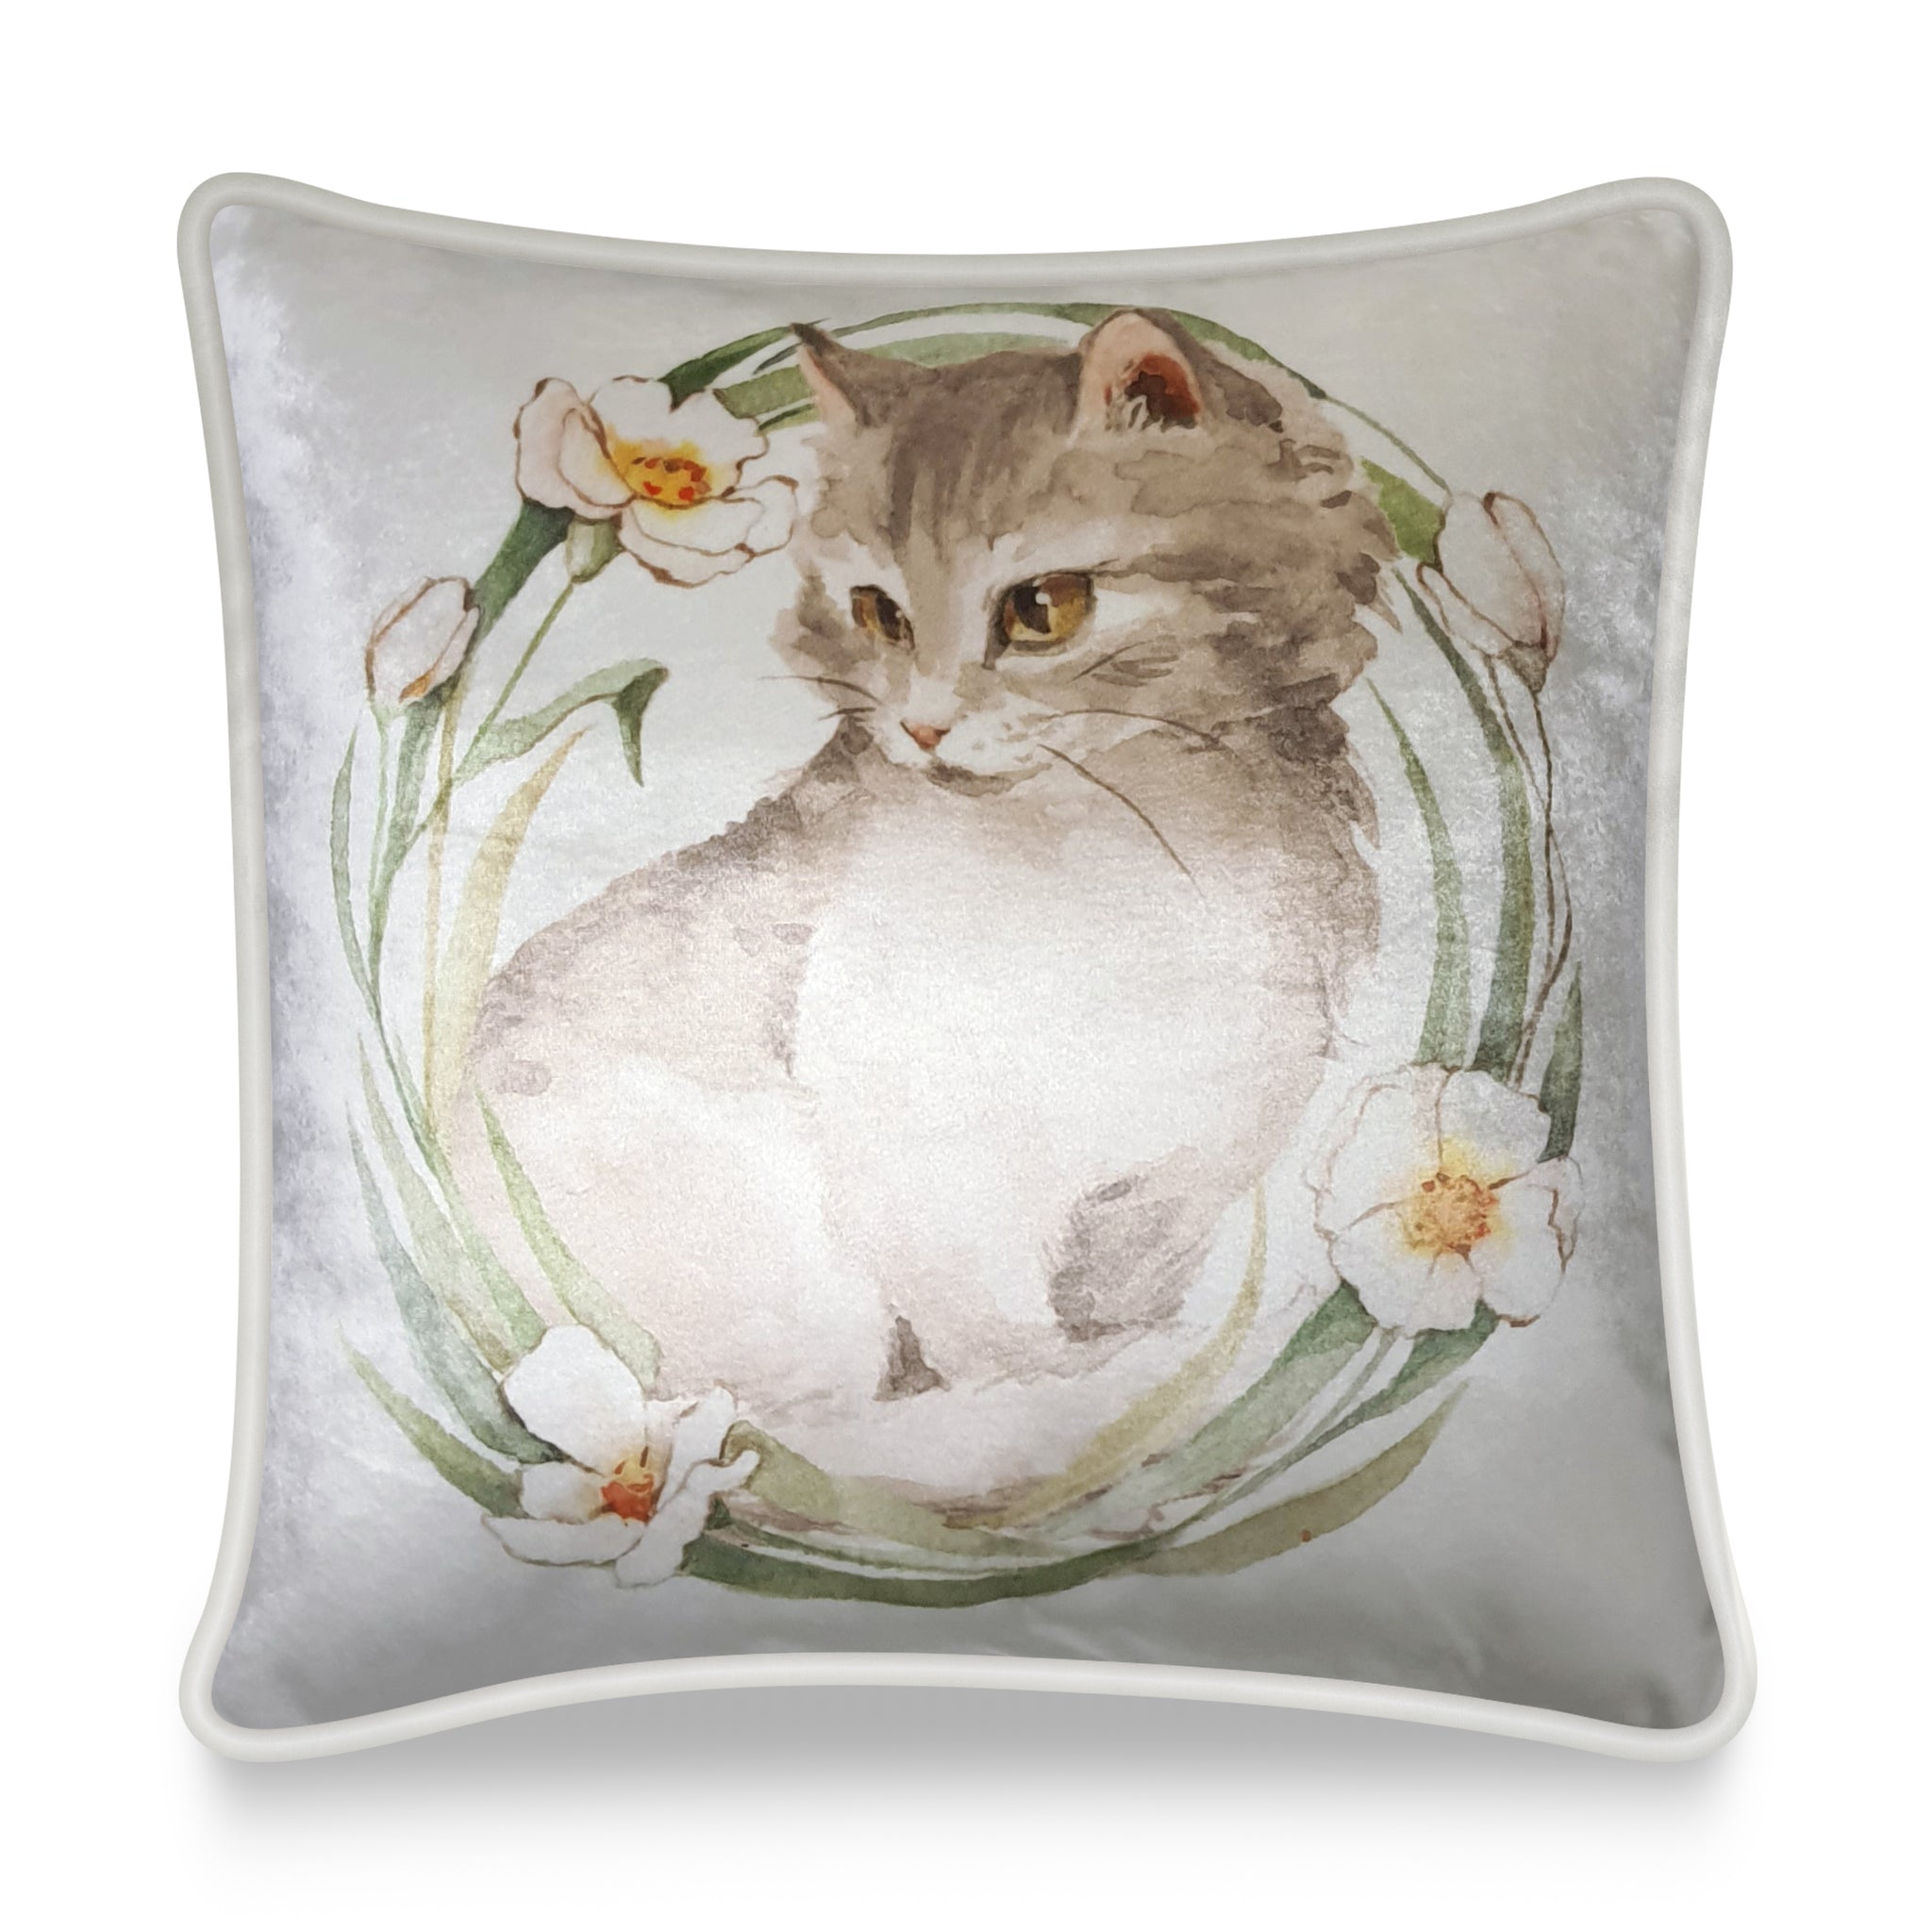  Velvet Cushion Cover Cute Kitten and Flowers Decorative Pillowcase Modern Home Decor Throw Pillow for Sofa Chair 45x45 cm 